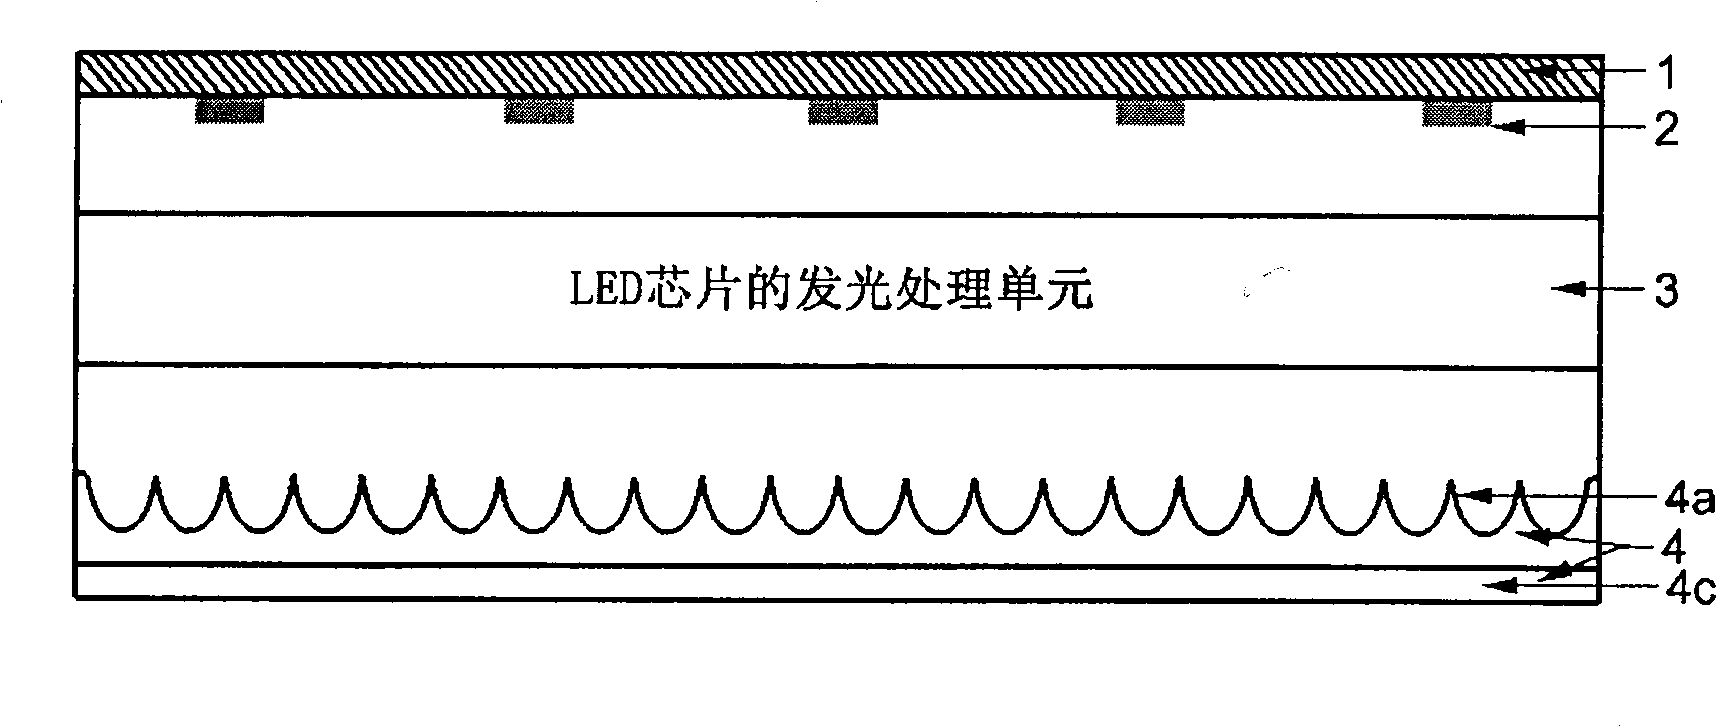 Light source structure based on LED